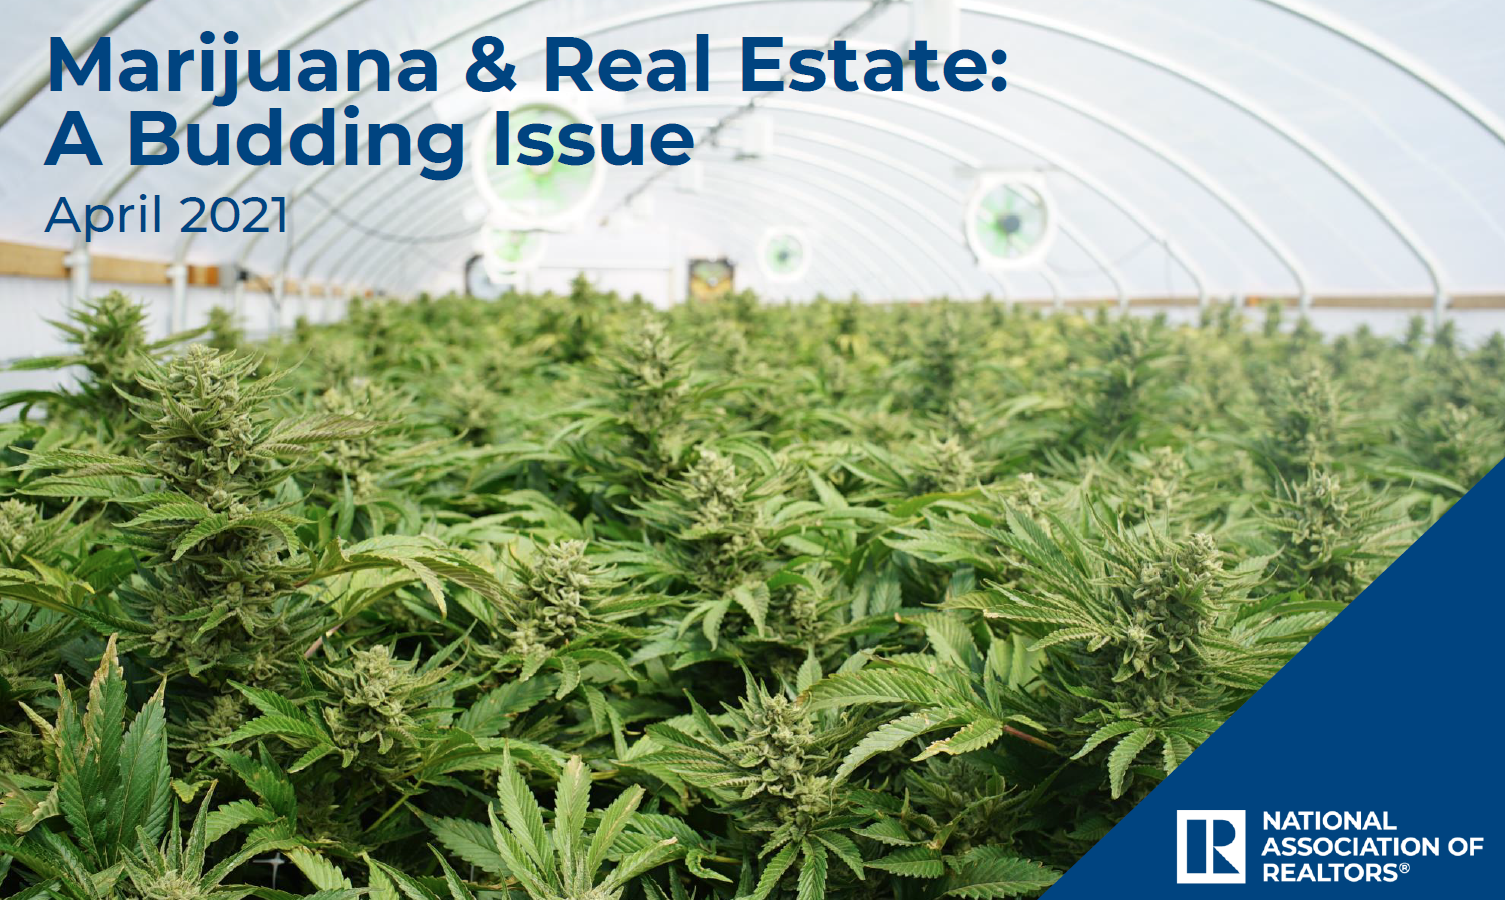 Marijuana & Real Estate: A Budding Issue